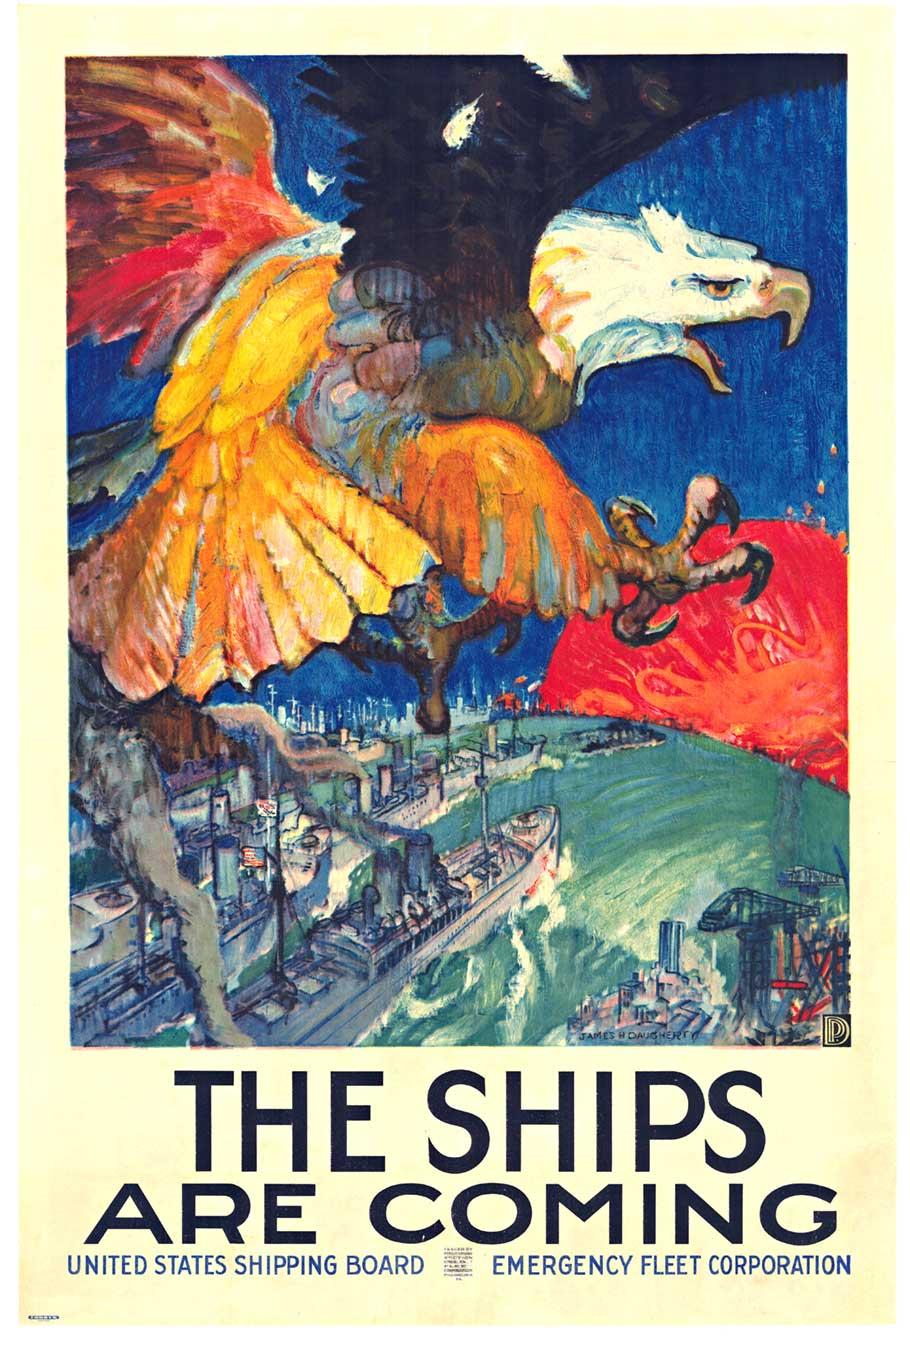 James Henry Daugherty Landscape Print – Original "The Ships Are Coming" vintage amerikanisches Plakat mit einem Adler.